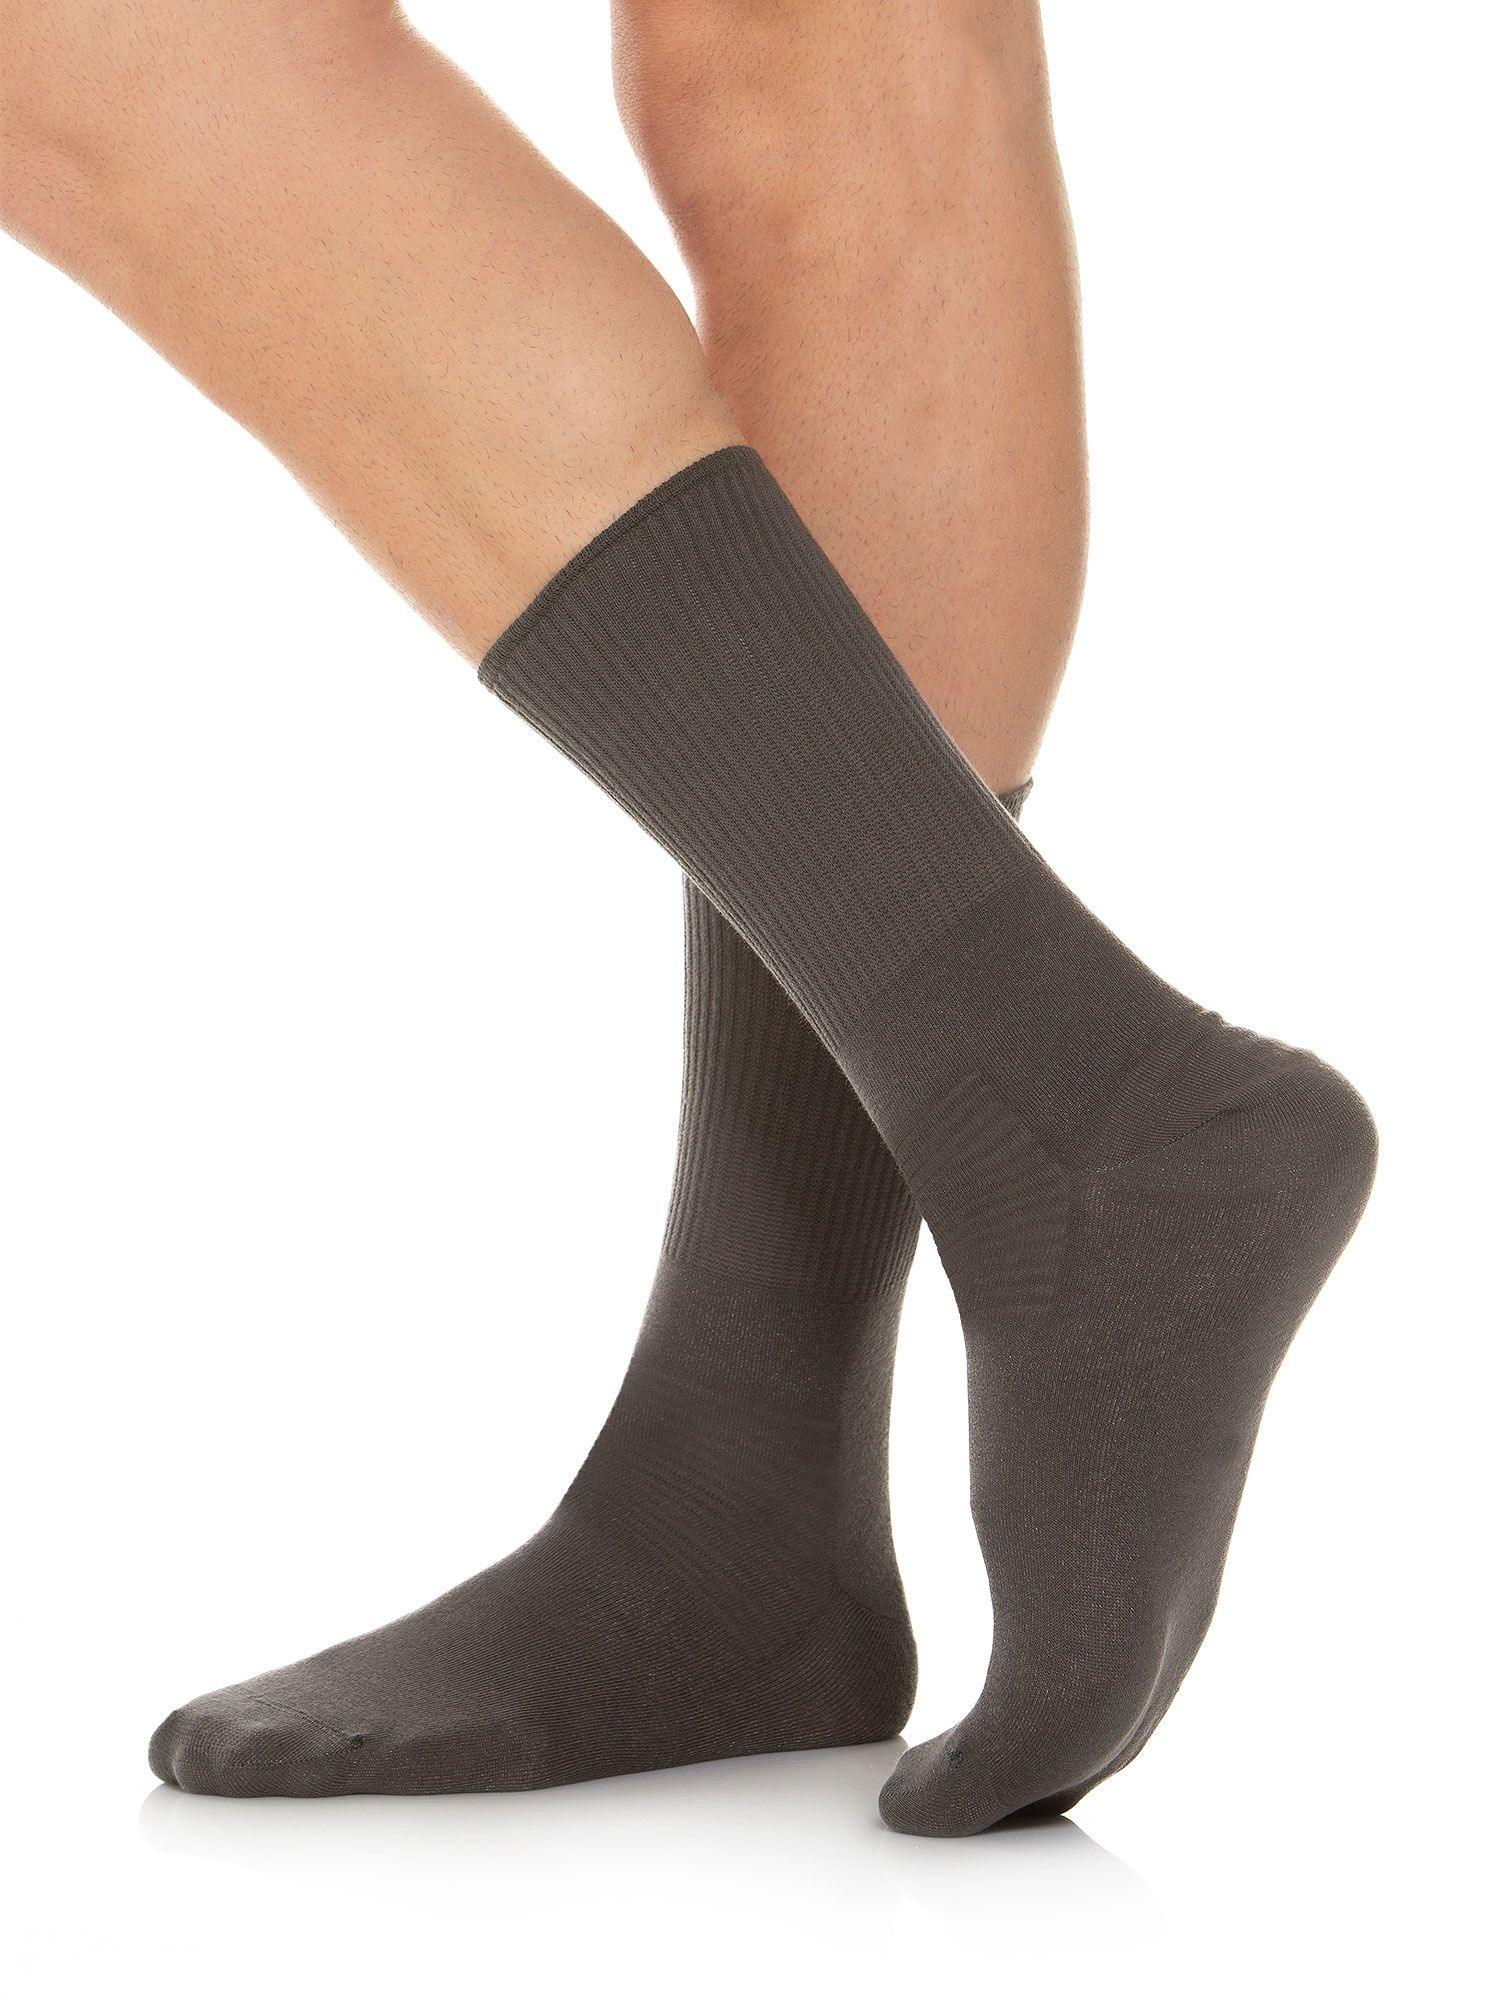 Buy Diabetic socks with – Shoppee fibre X-Static Wellness Silver